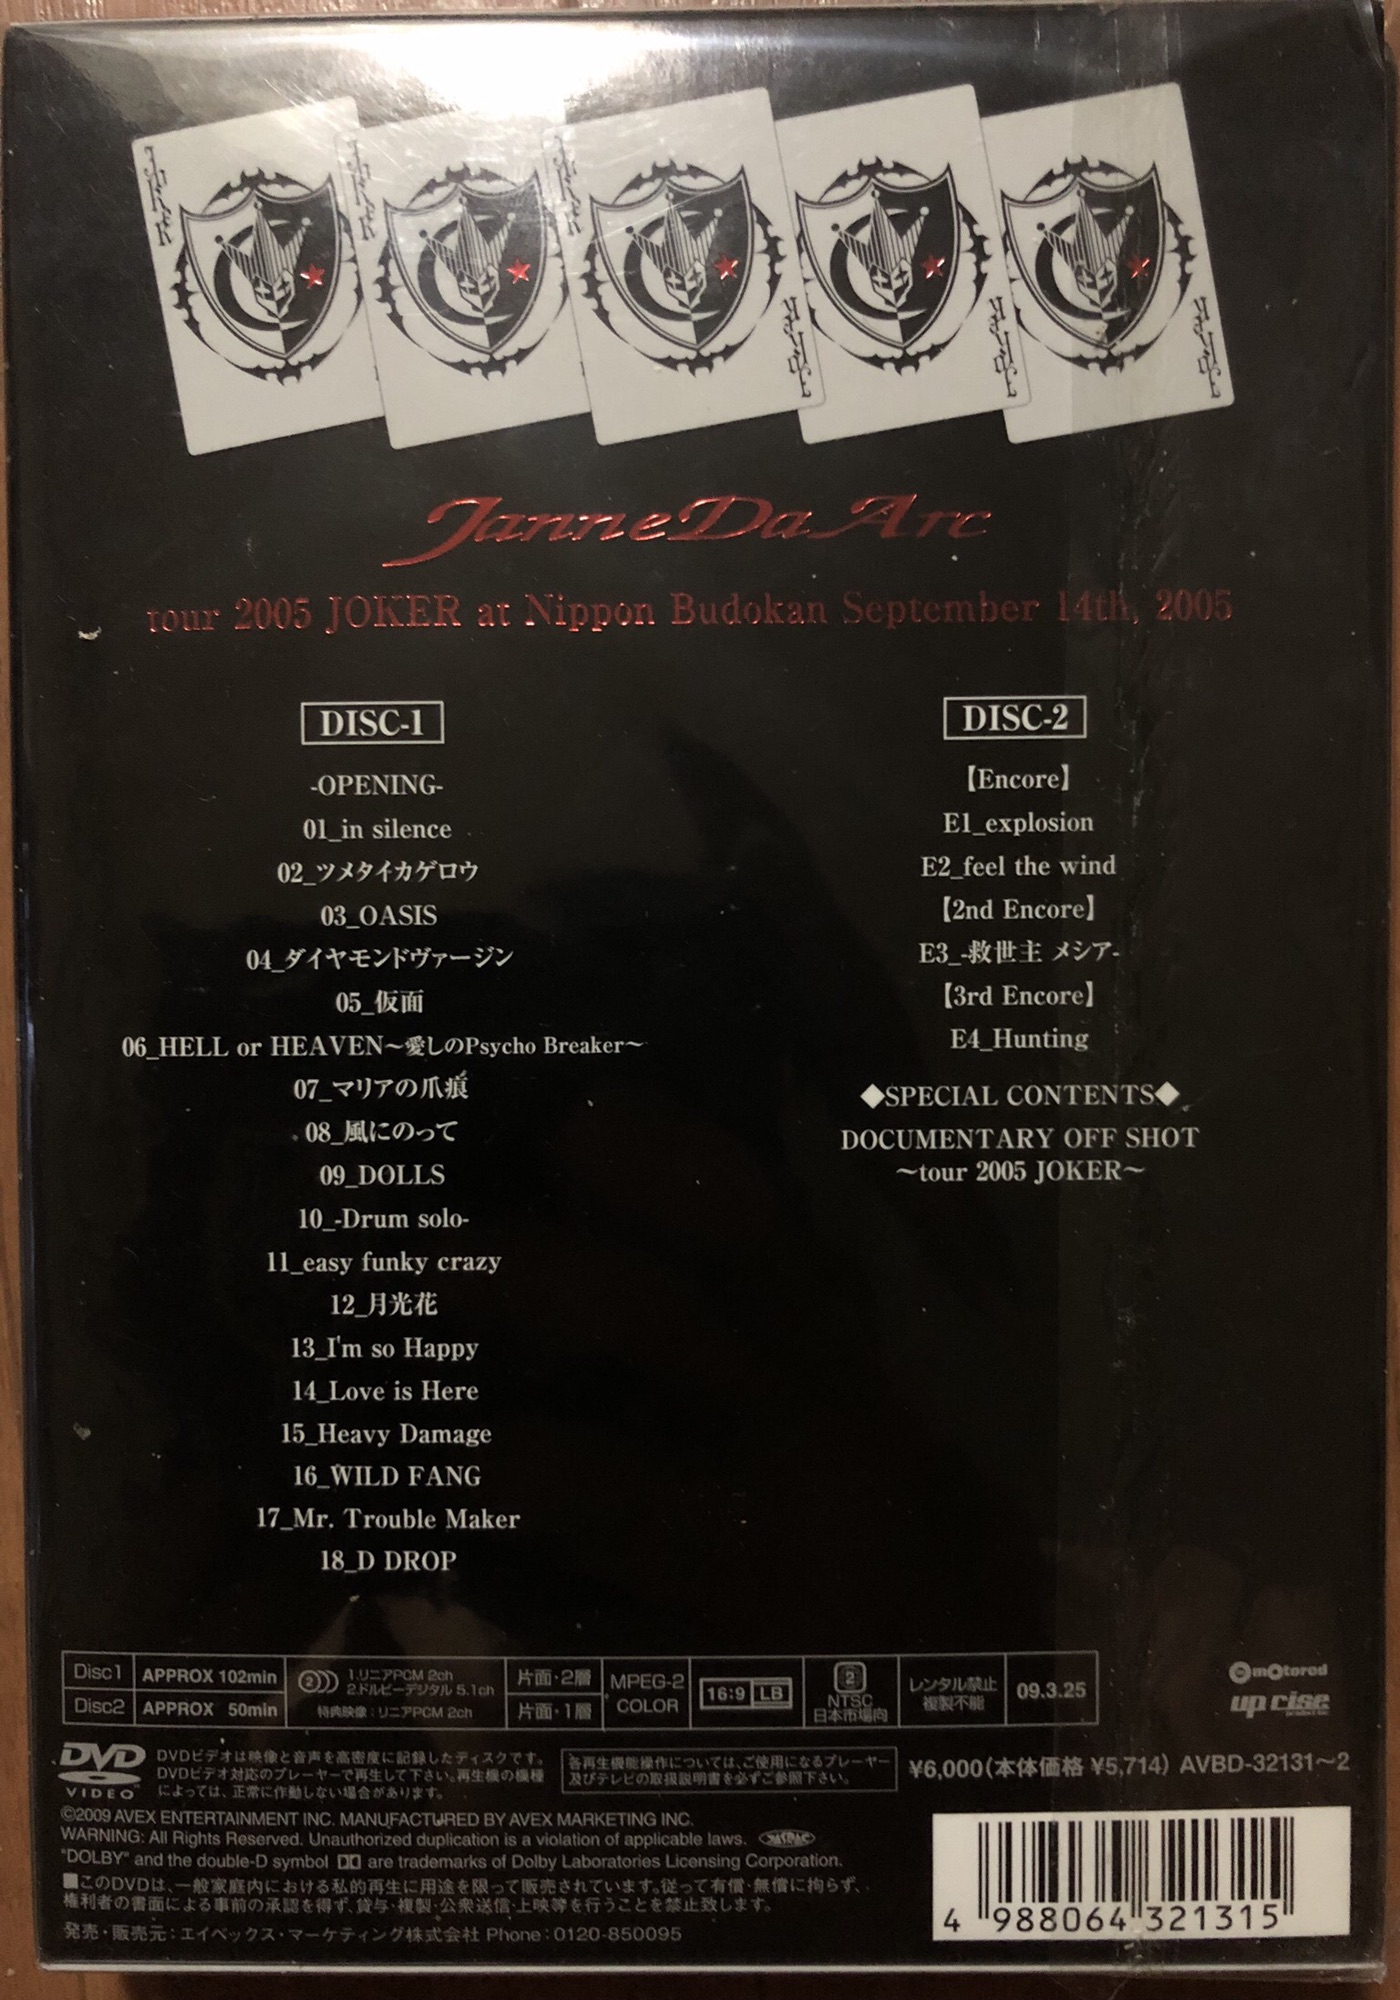 Live DVD&Blu-ray〝tour2005 JOKER〟 | Janne Da Arc discography 